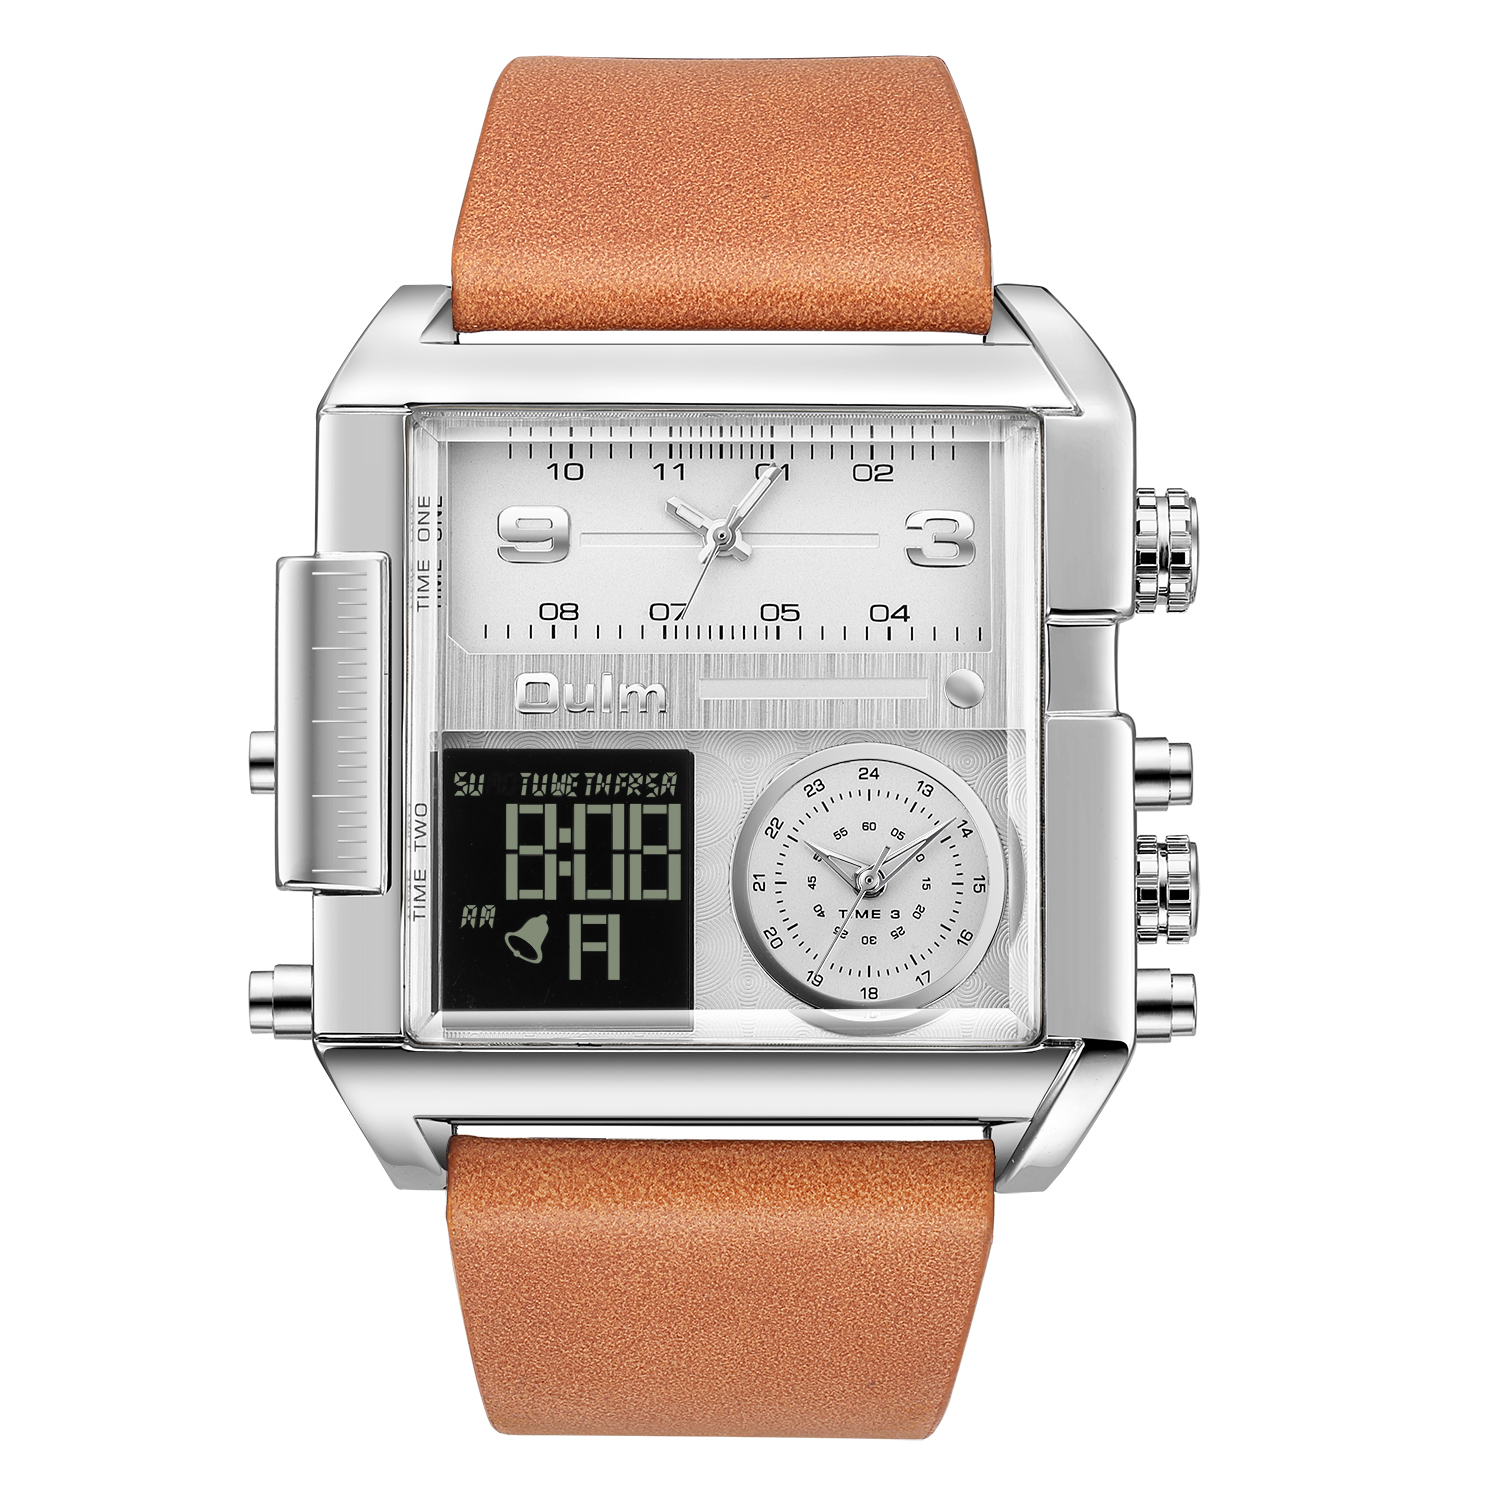 OULM NEW Multi-time zone quartz electronic men's watch